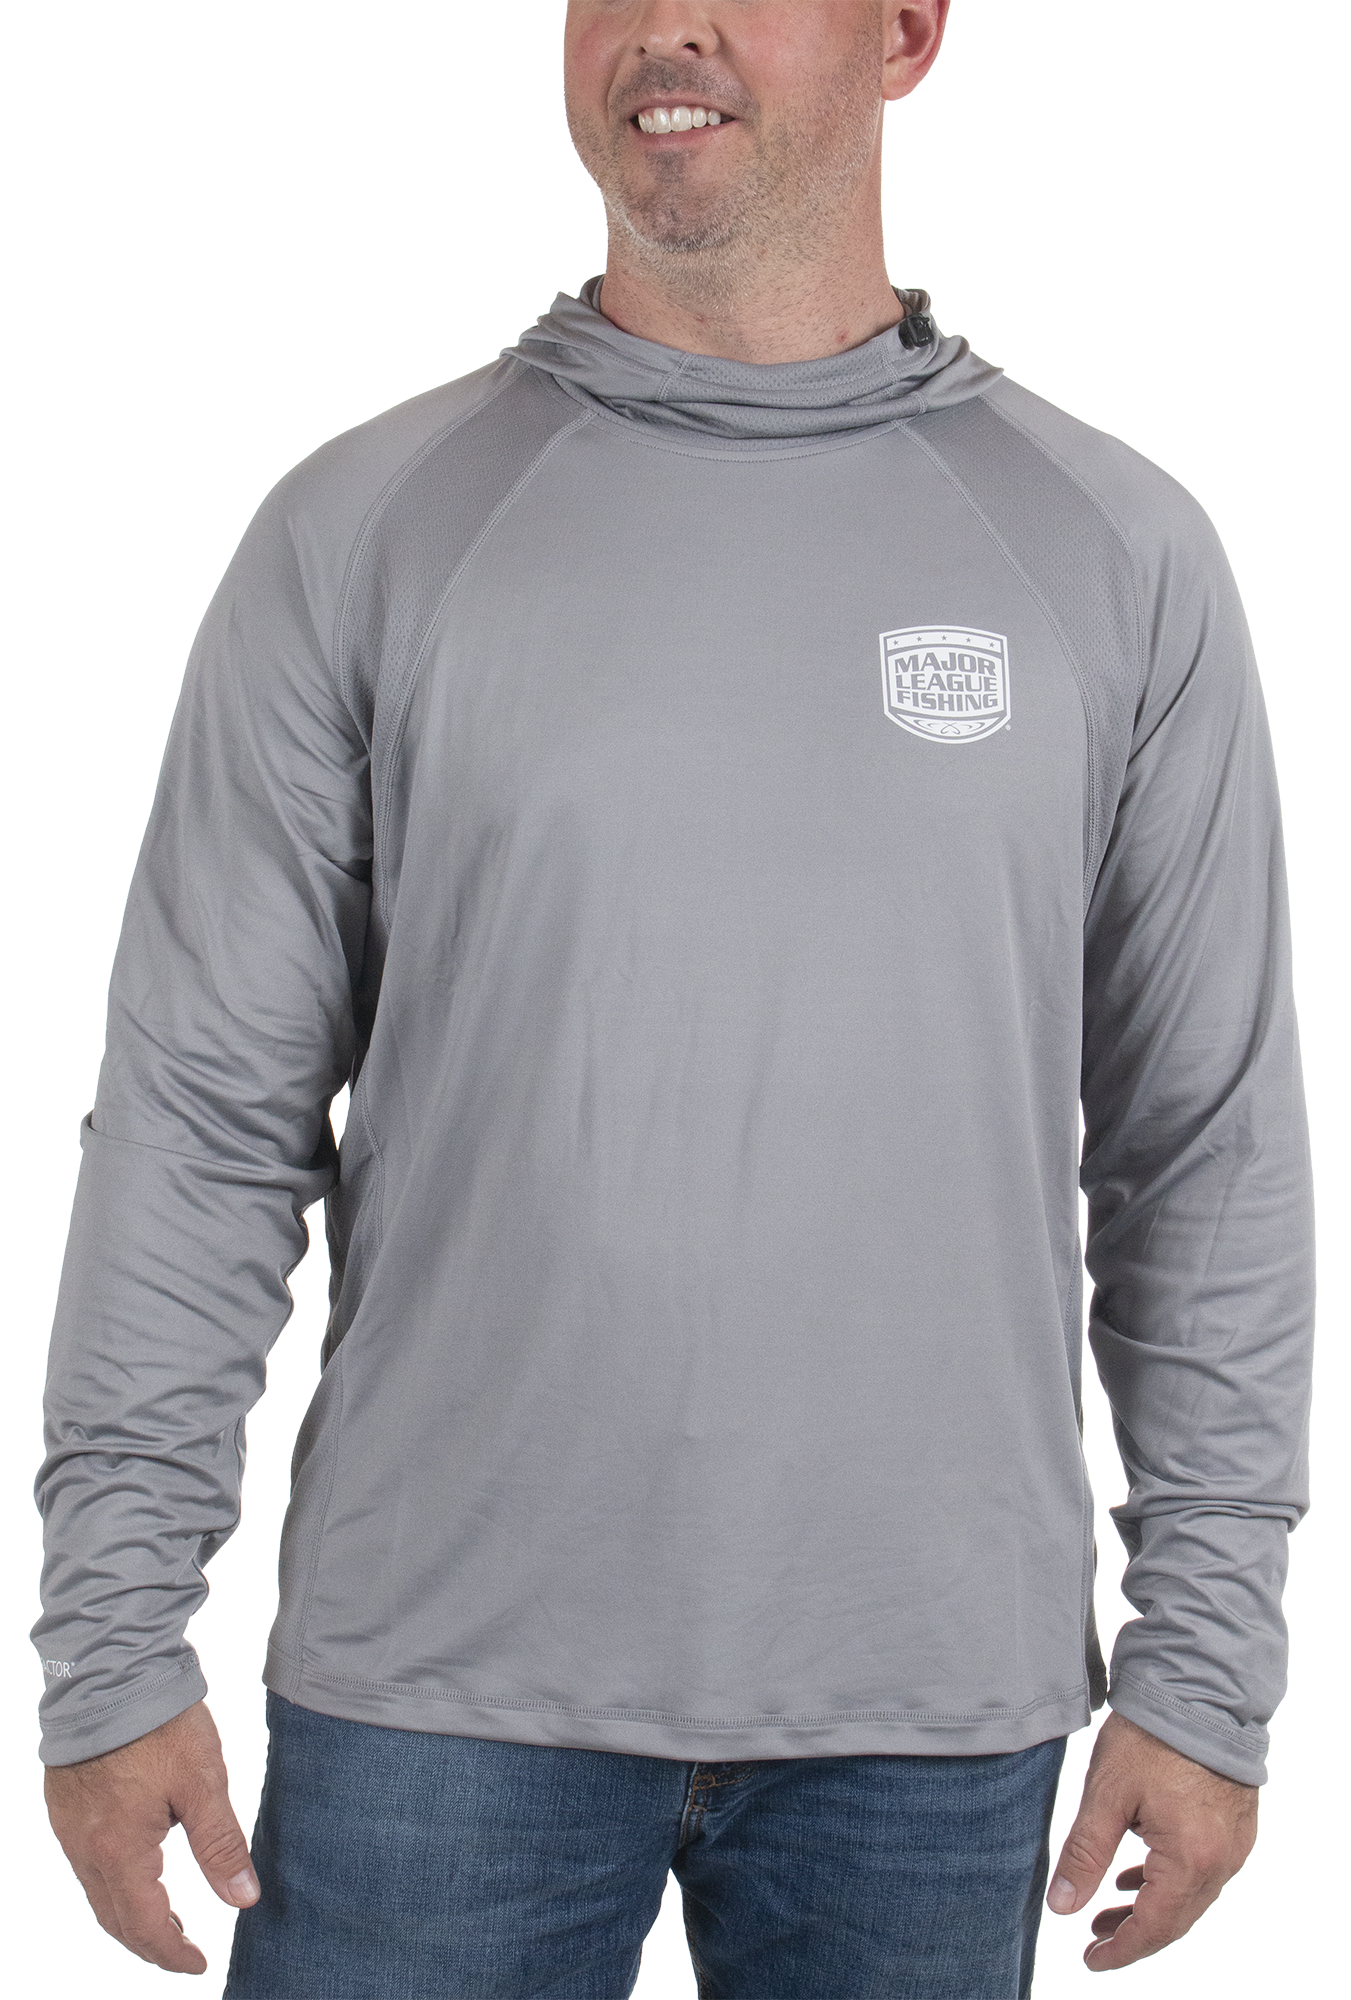 Realtree Men's Long Sleeve Fishing Hoodie, Performance Hooded Tee Shirt in Grey, Sizes S-3xl